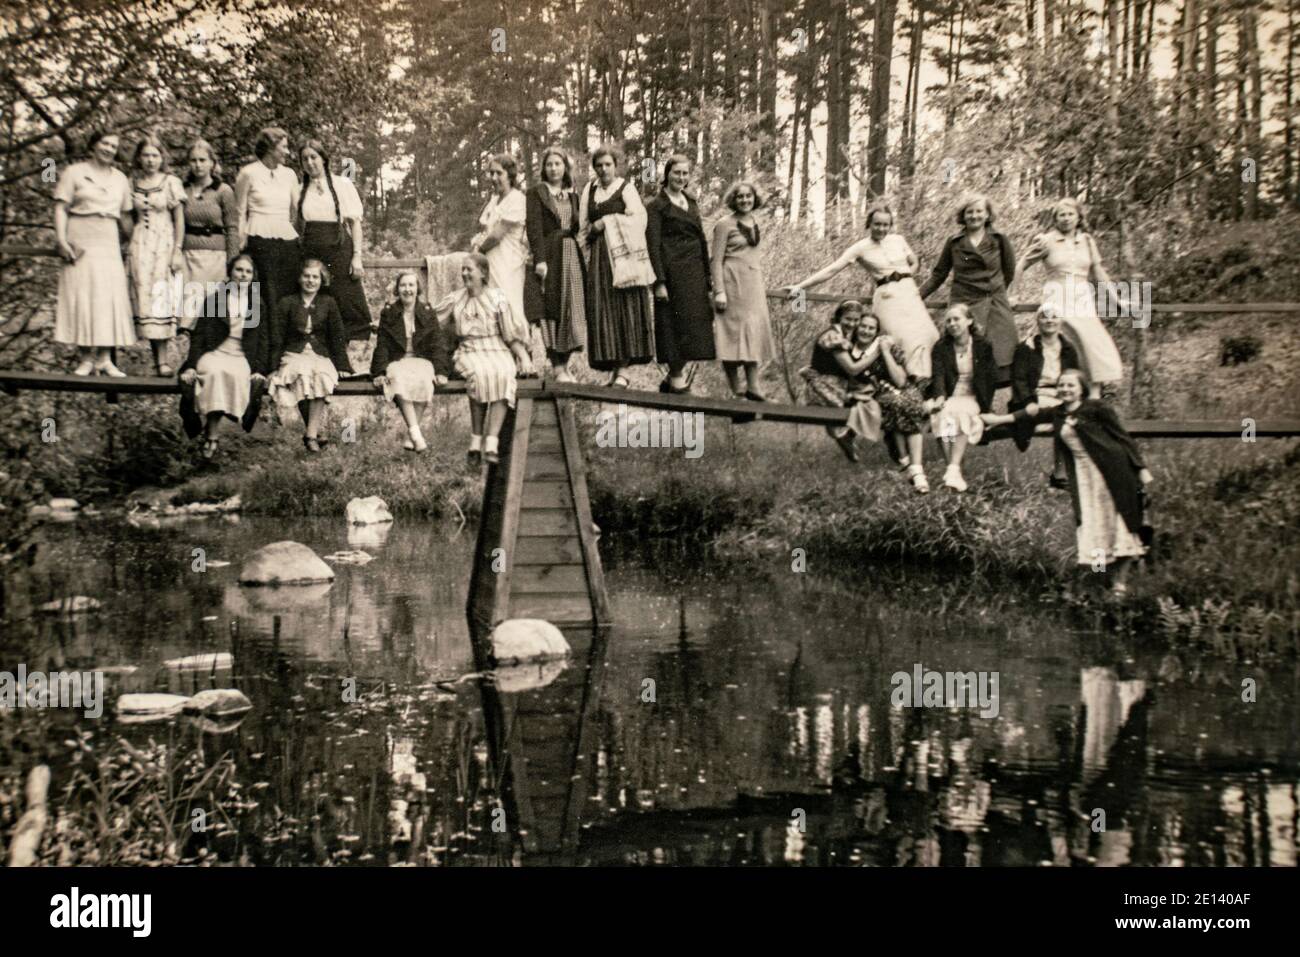 Latvia - CIRCA 1930s: Group photo on bridge in forest. Vintage archive Art deco era photo Stock Photo